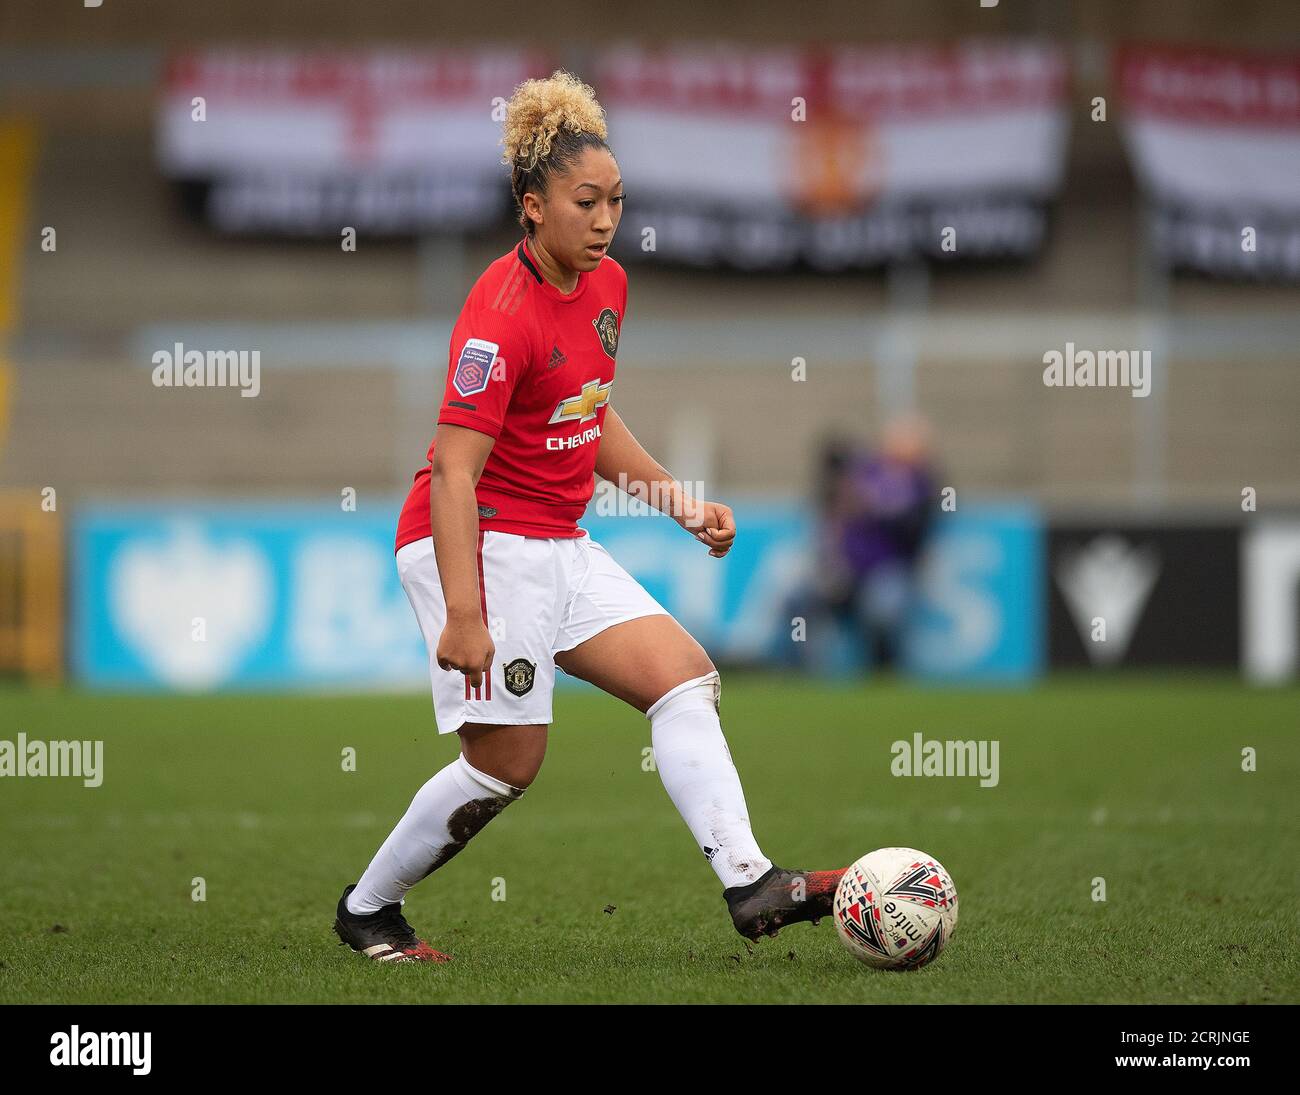 Manchester United Lauren James BILDNACHWEIS : © MARK PAIN / ALAMY STOCK FOTO Stockfoto